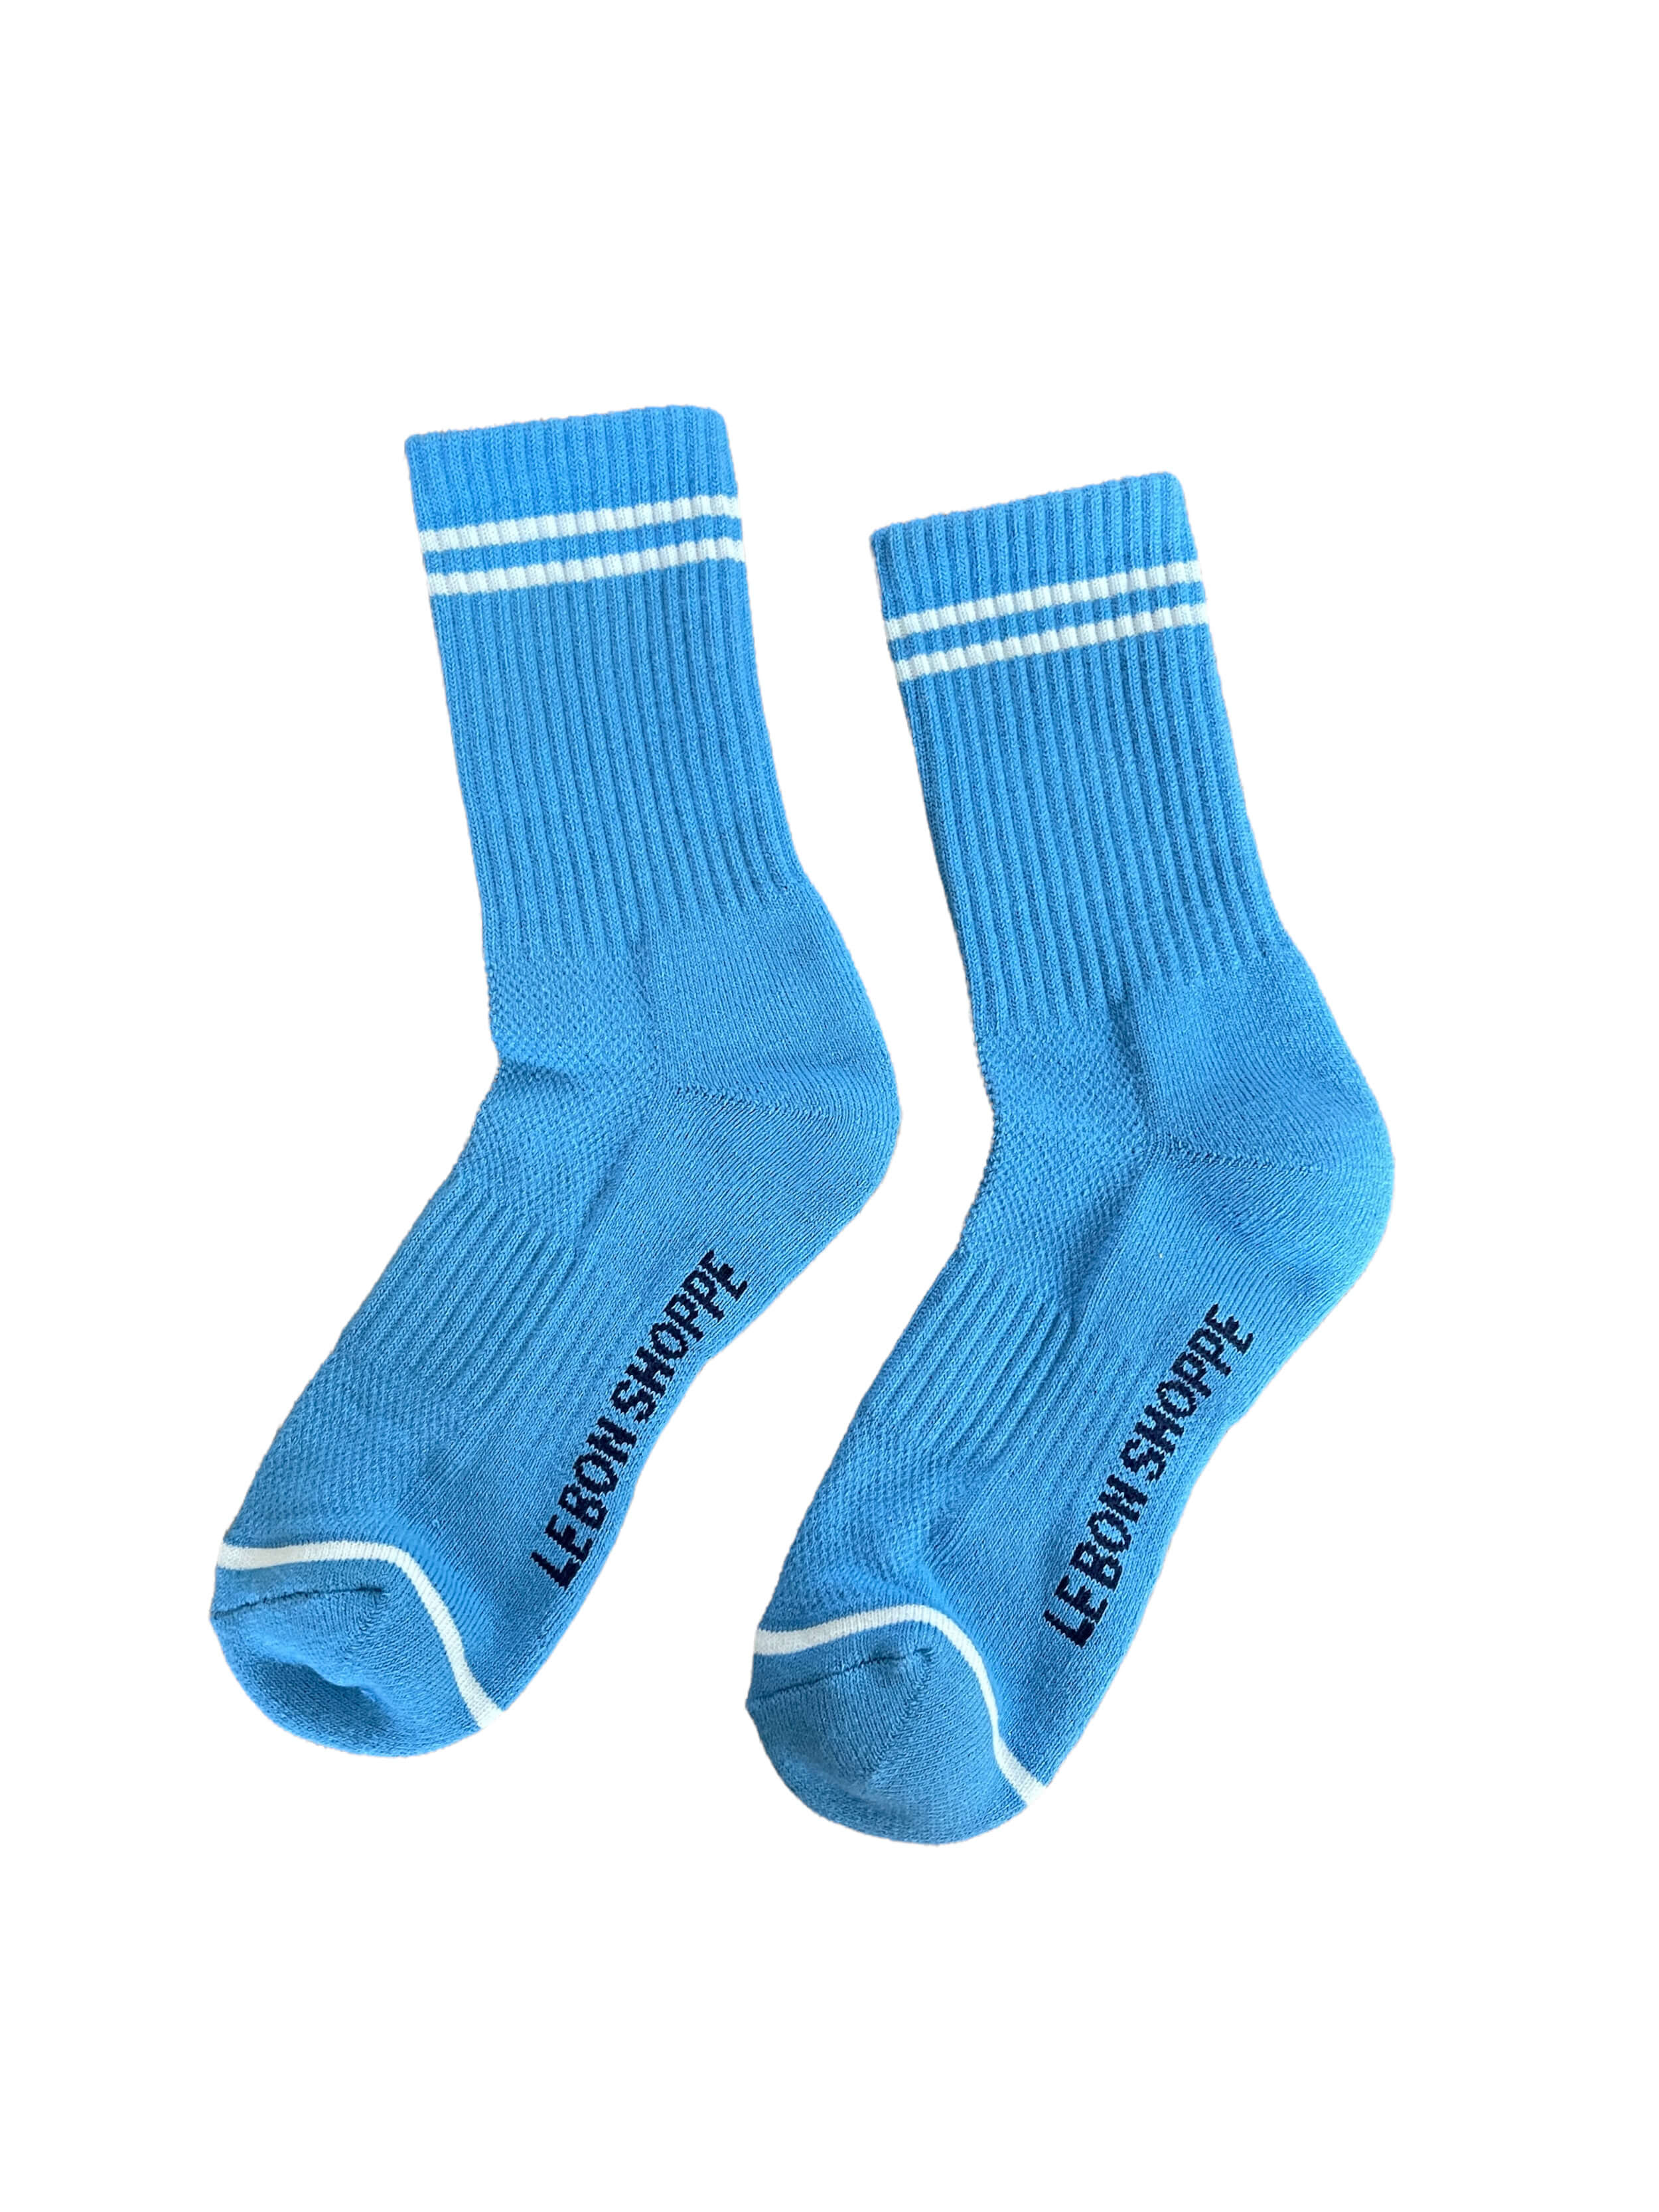 Boyfriend Socks | French Blue | by Le Bon Shoppe - Lifestory